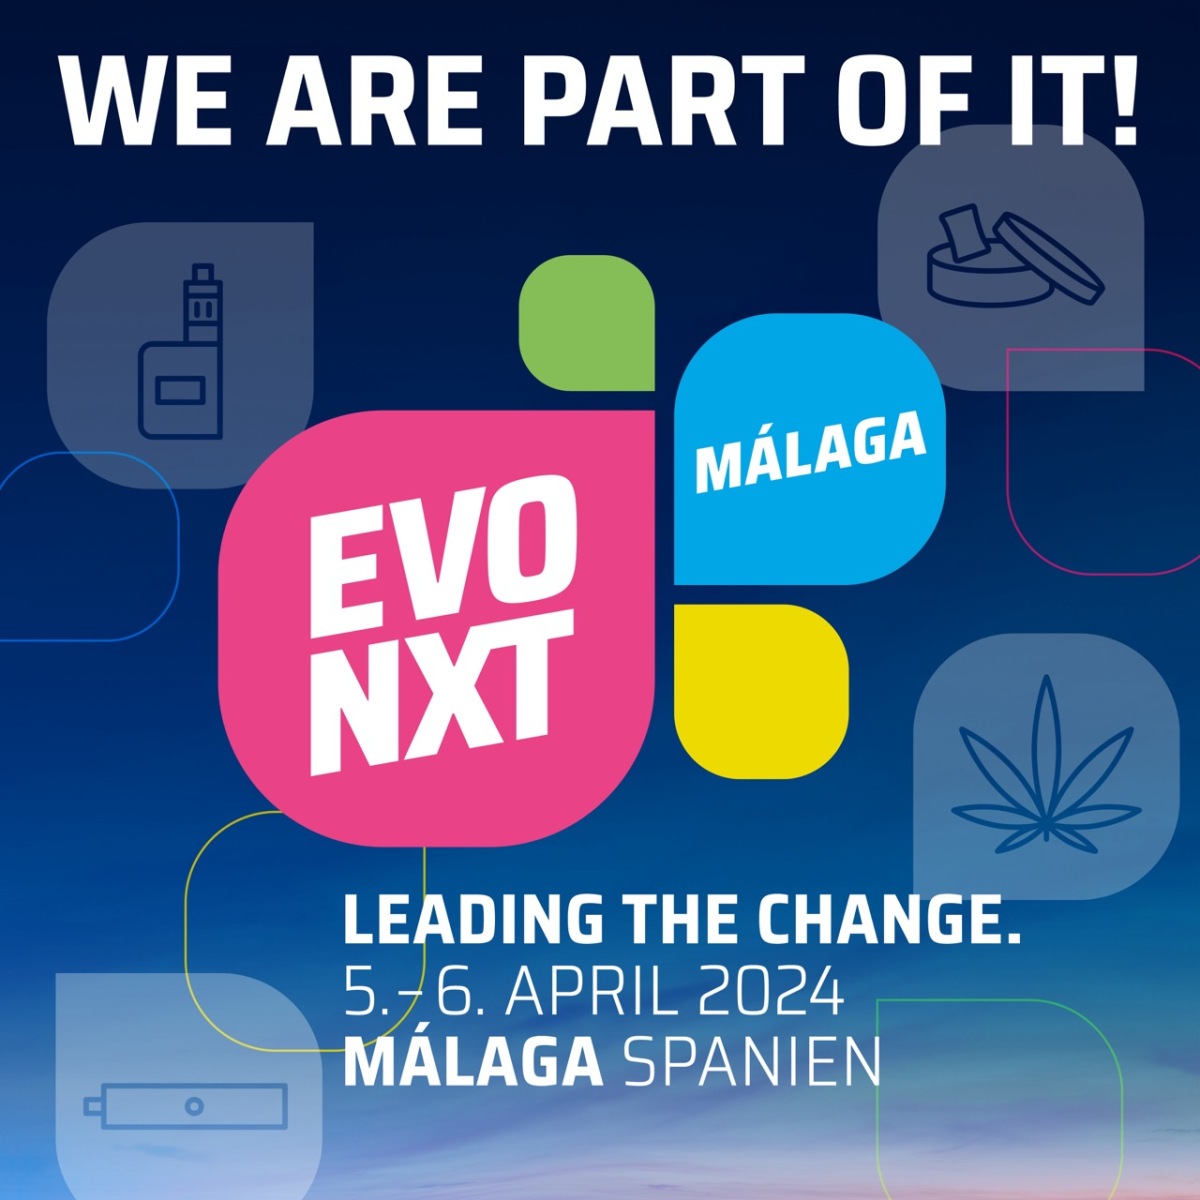 2FIRSTS成为EVO NXT官方合作媒体 “三新”时代下助力新型烟草行业可持续发展